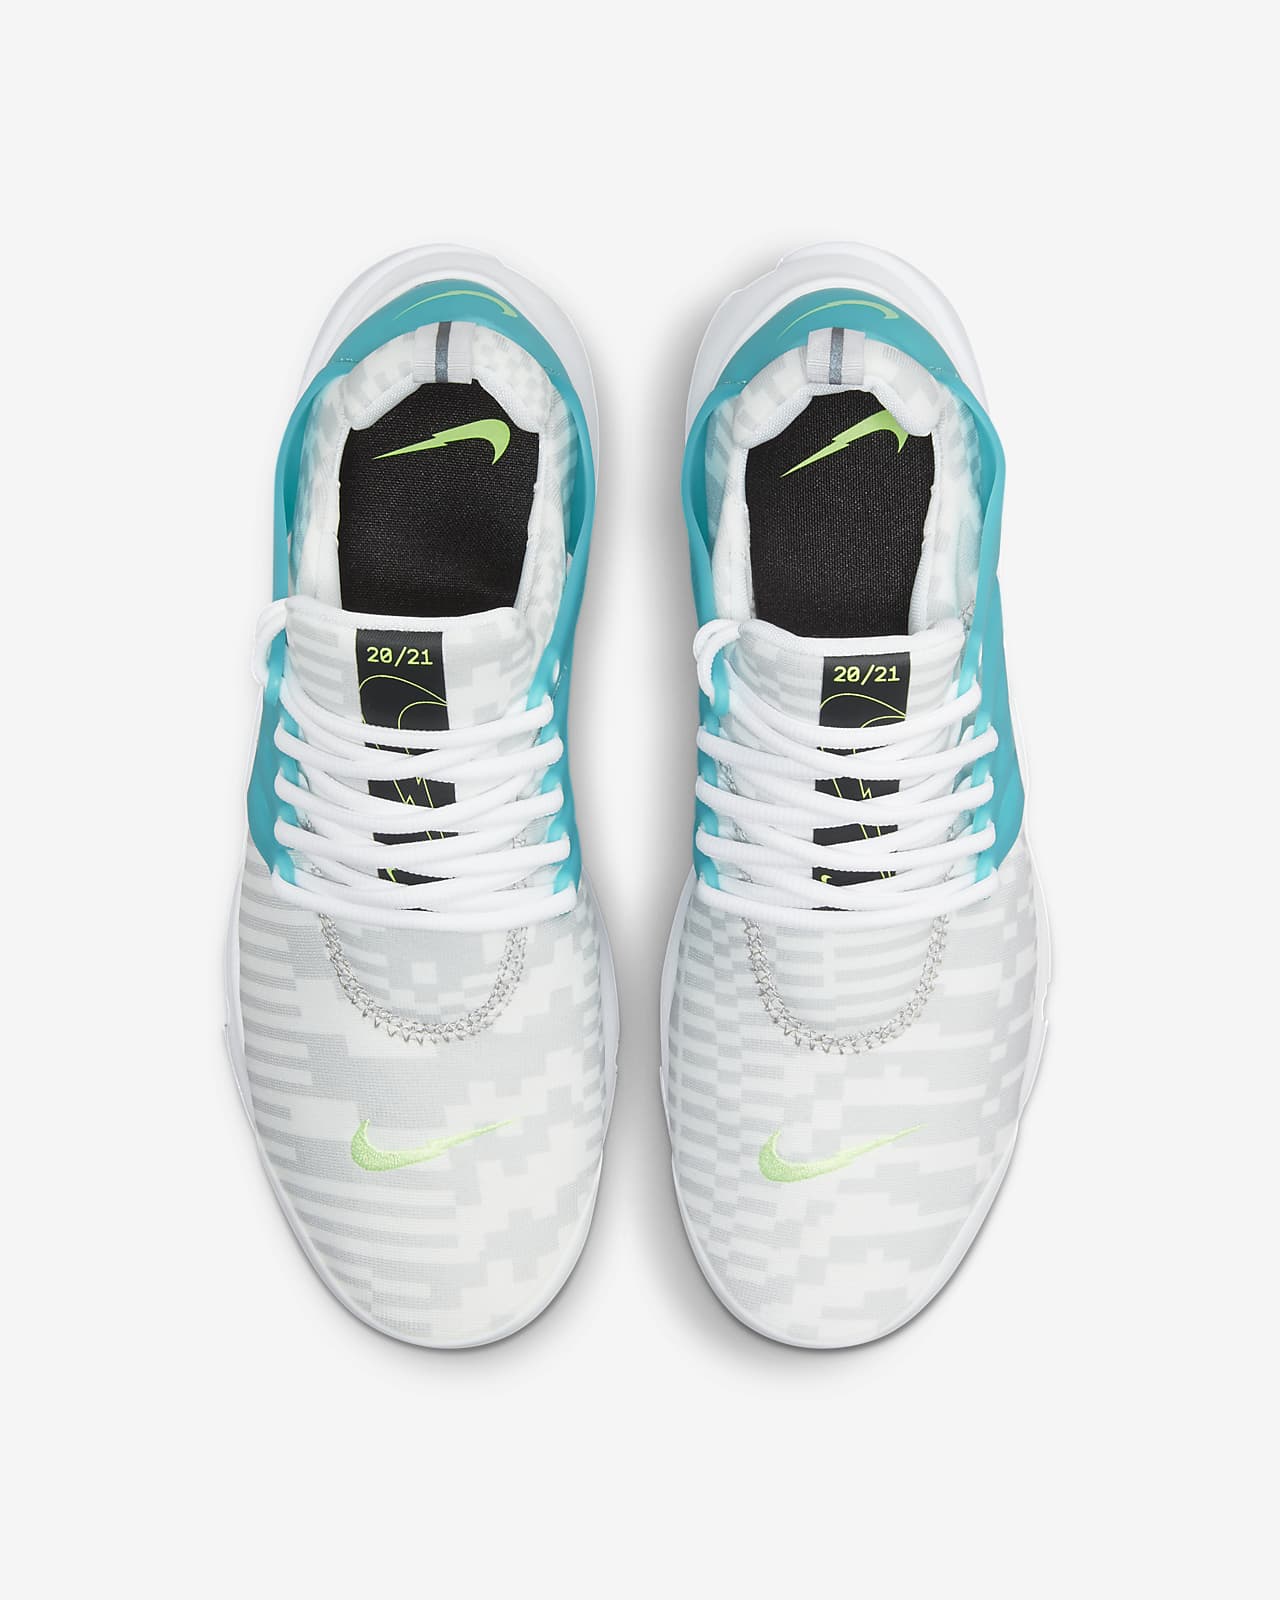 Nike Air Presto Shoe